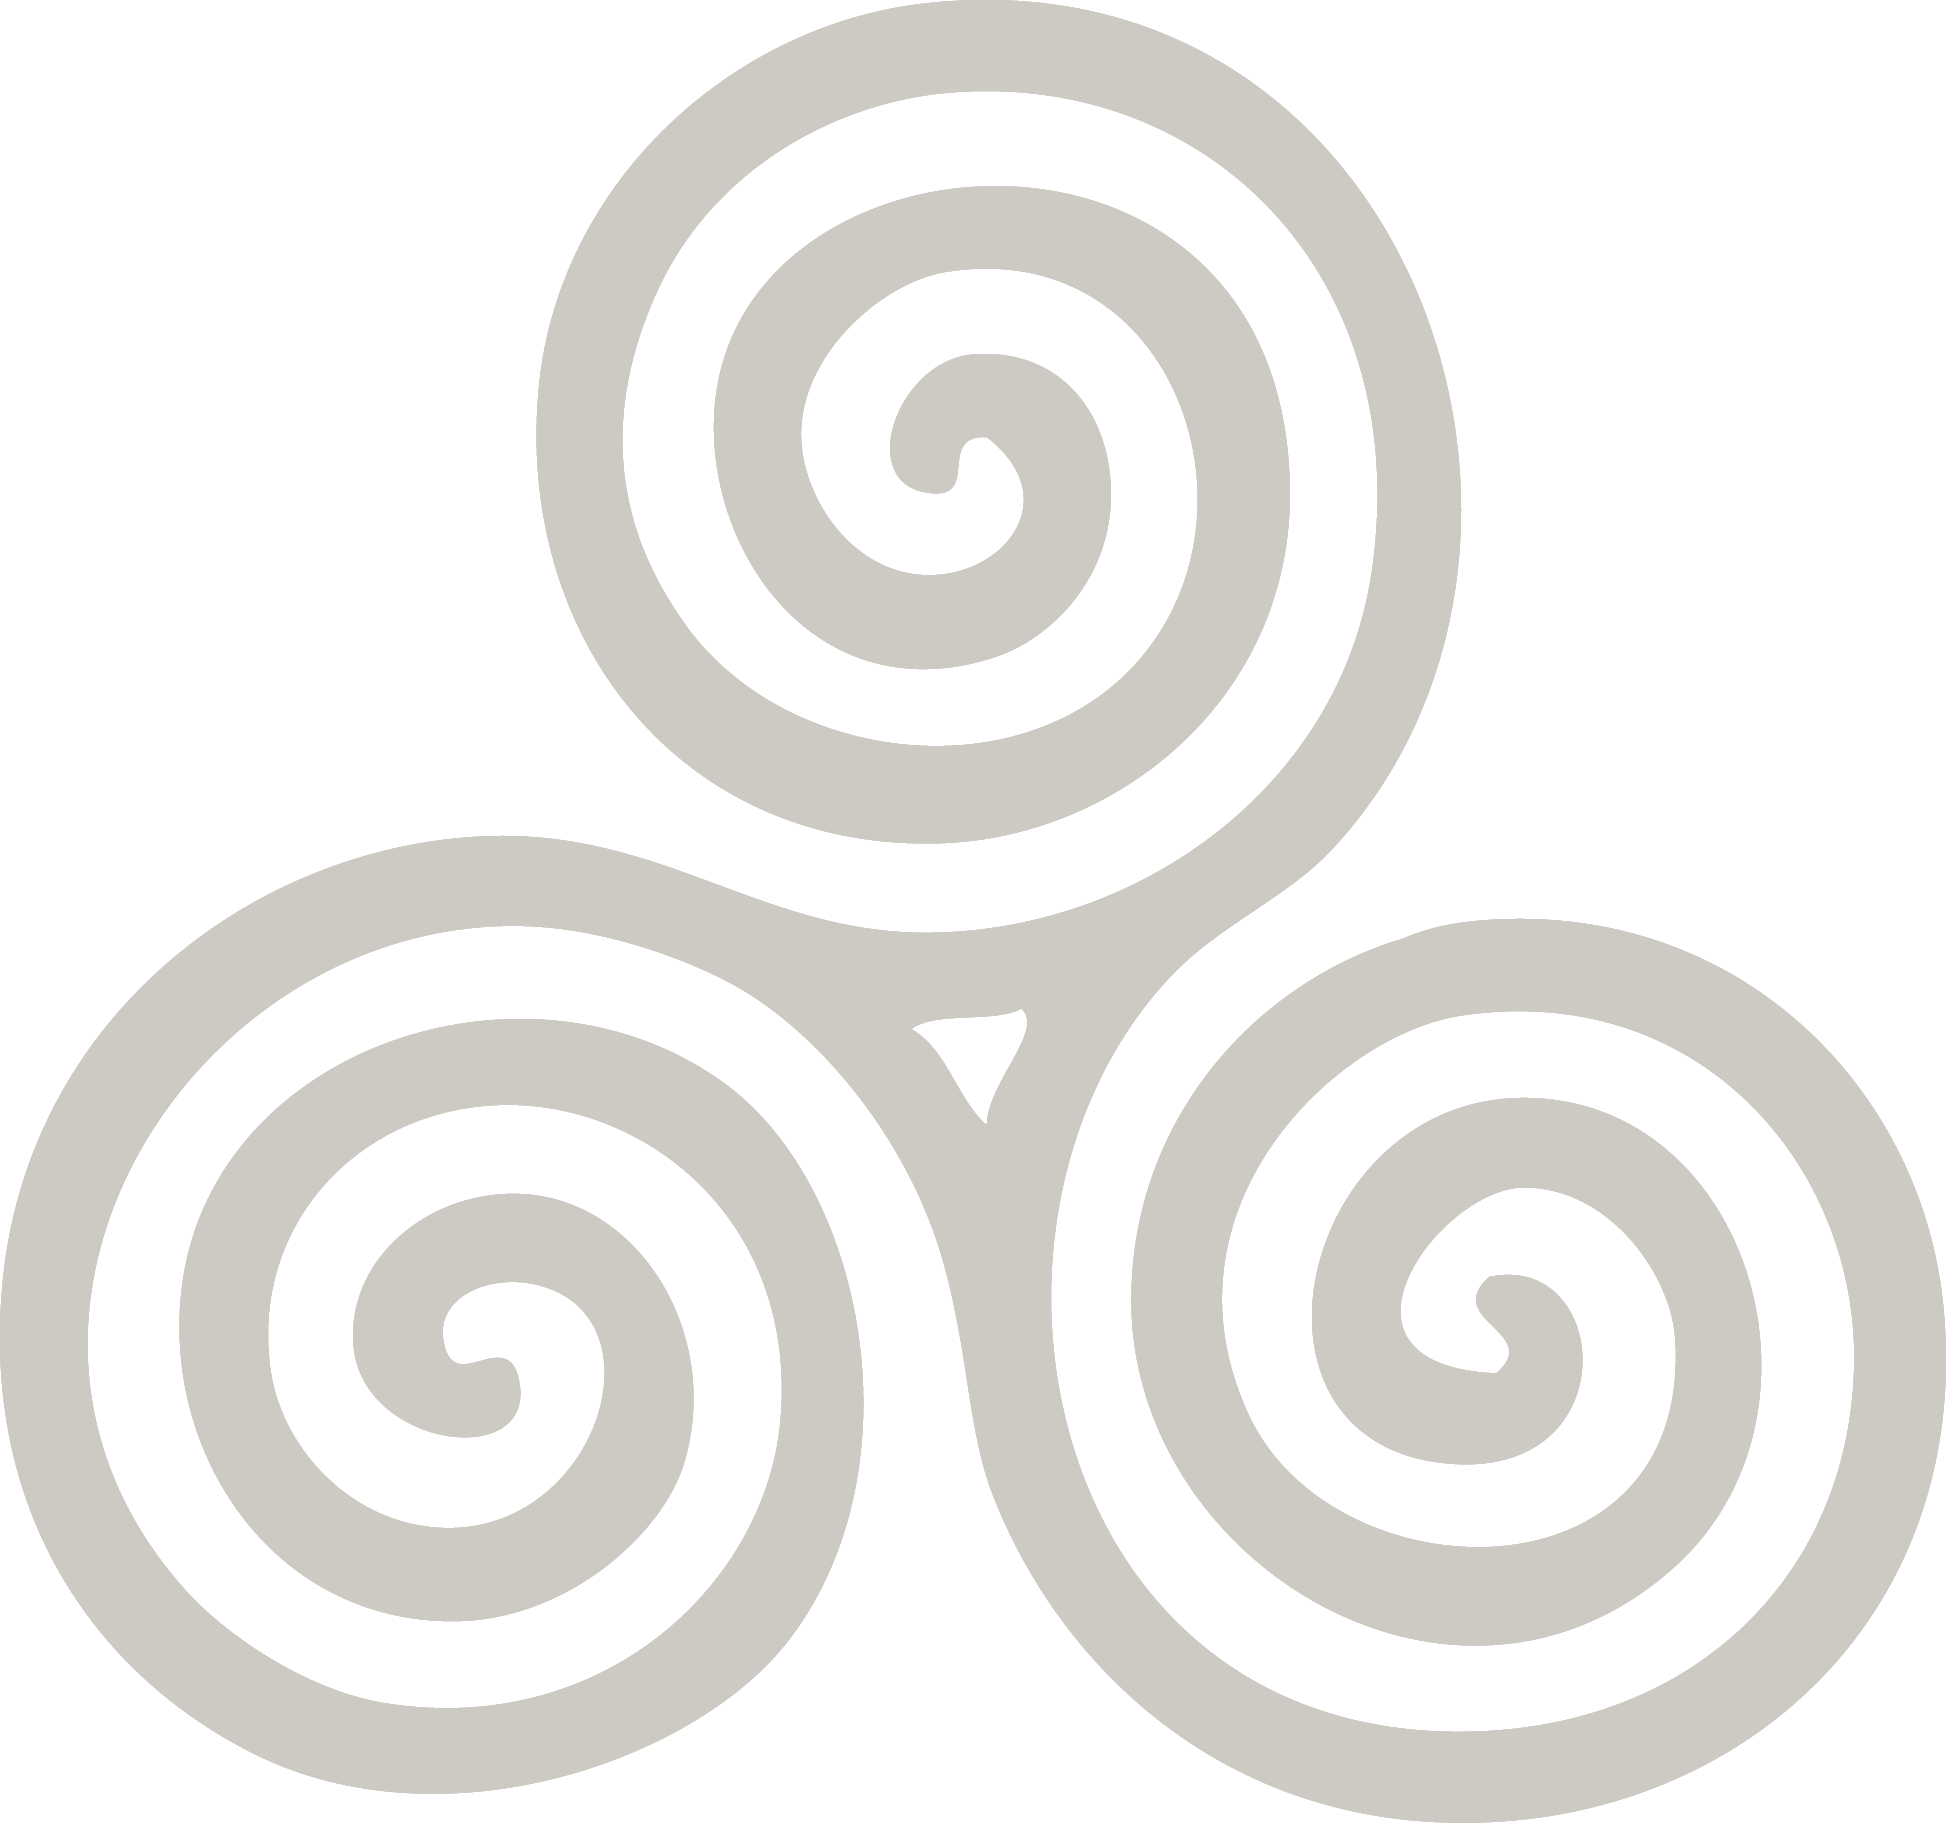 Celtic Üçlü Spiral PNG Dosyası